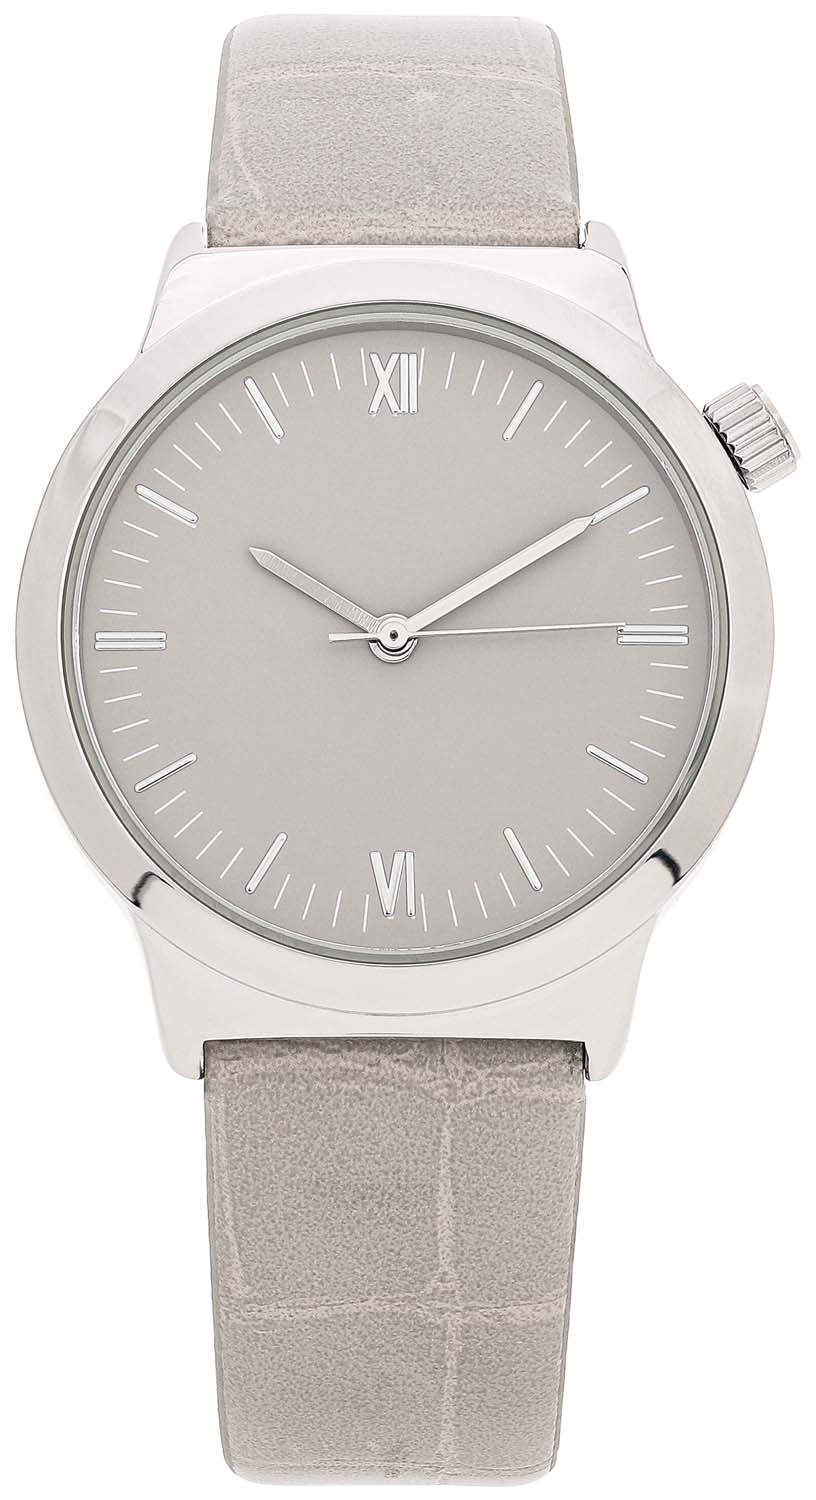 Sieraden Horloges Analoge horloges Analoog horloge wit-zilver simpele stijl 